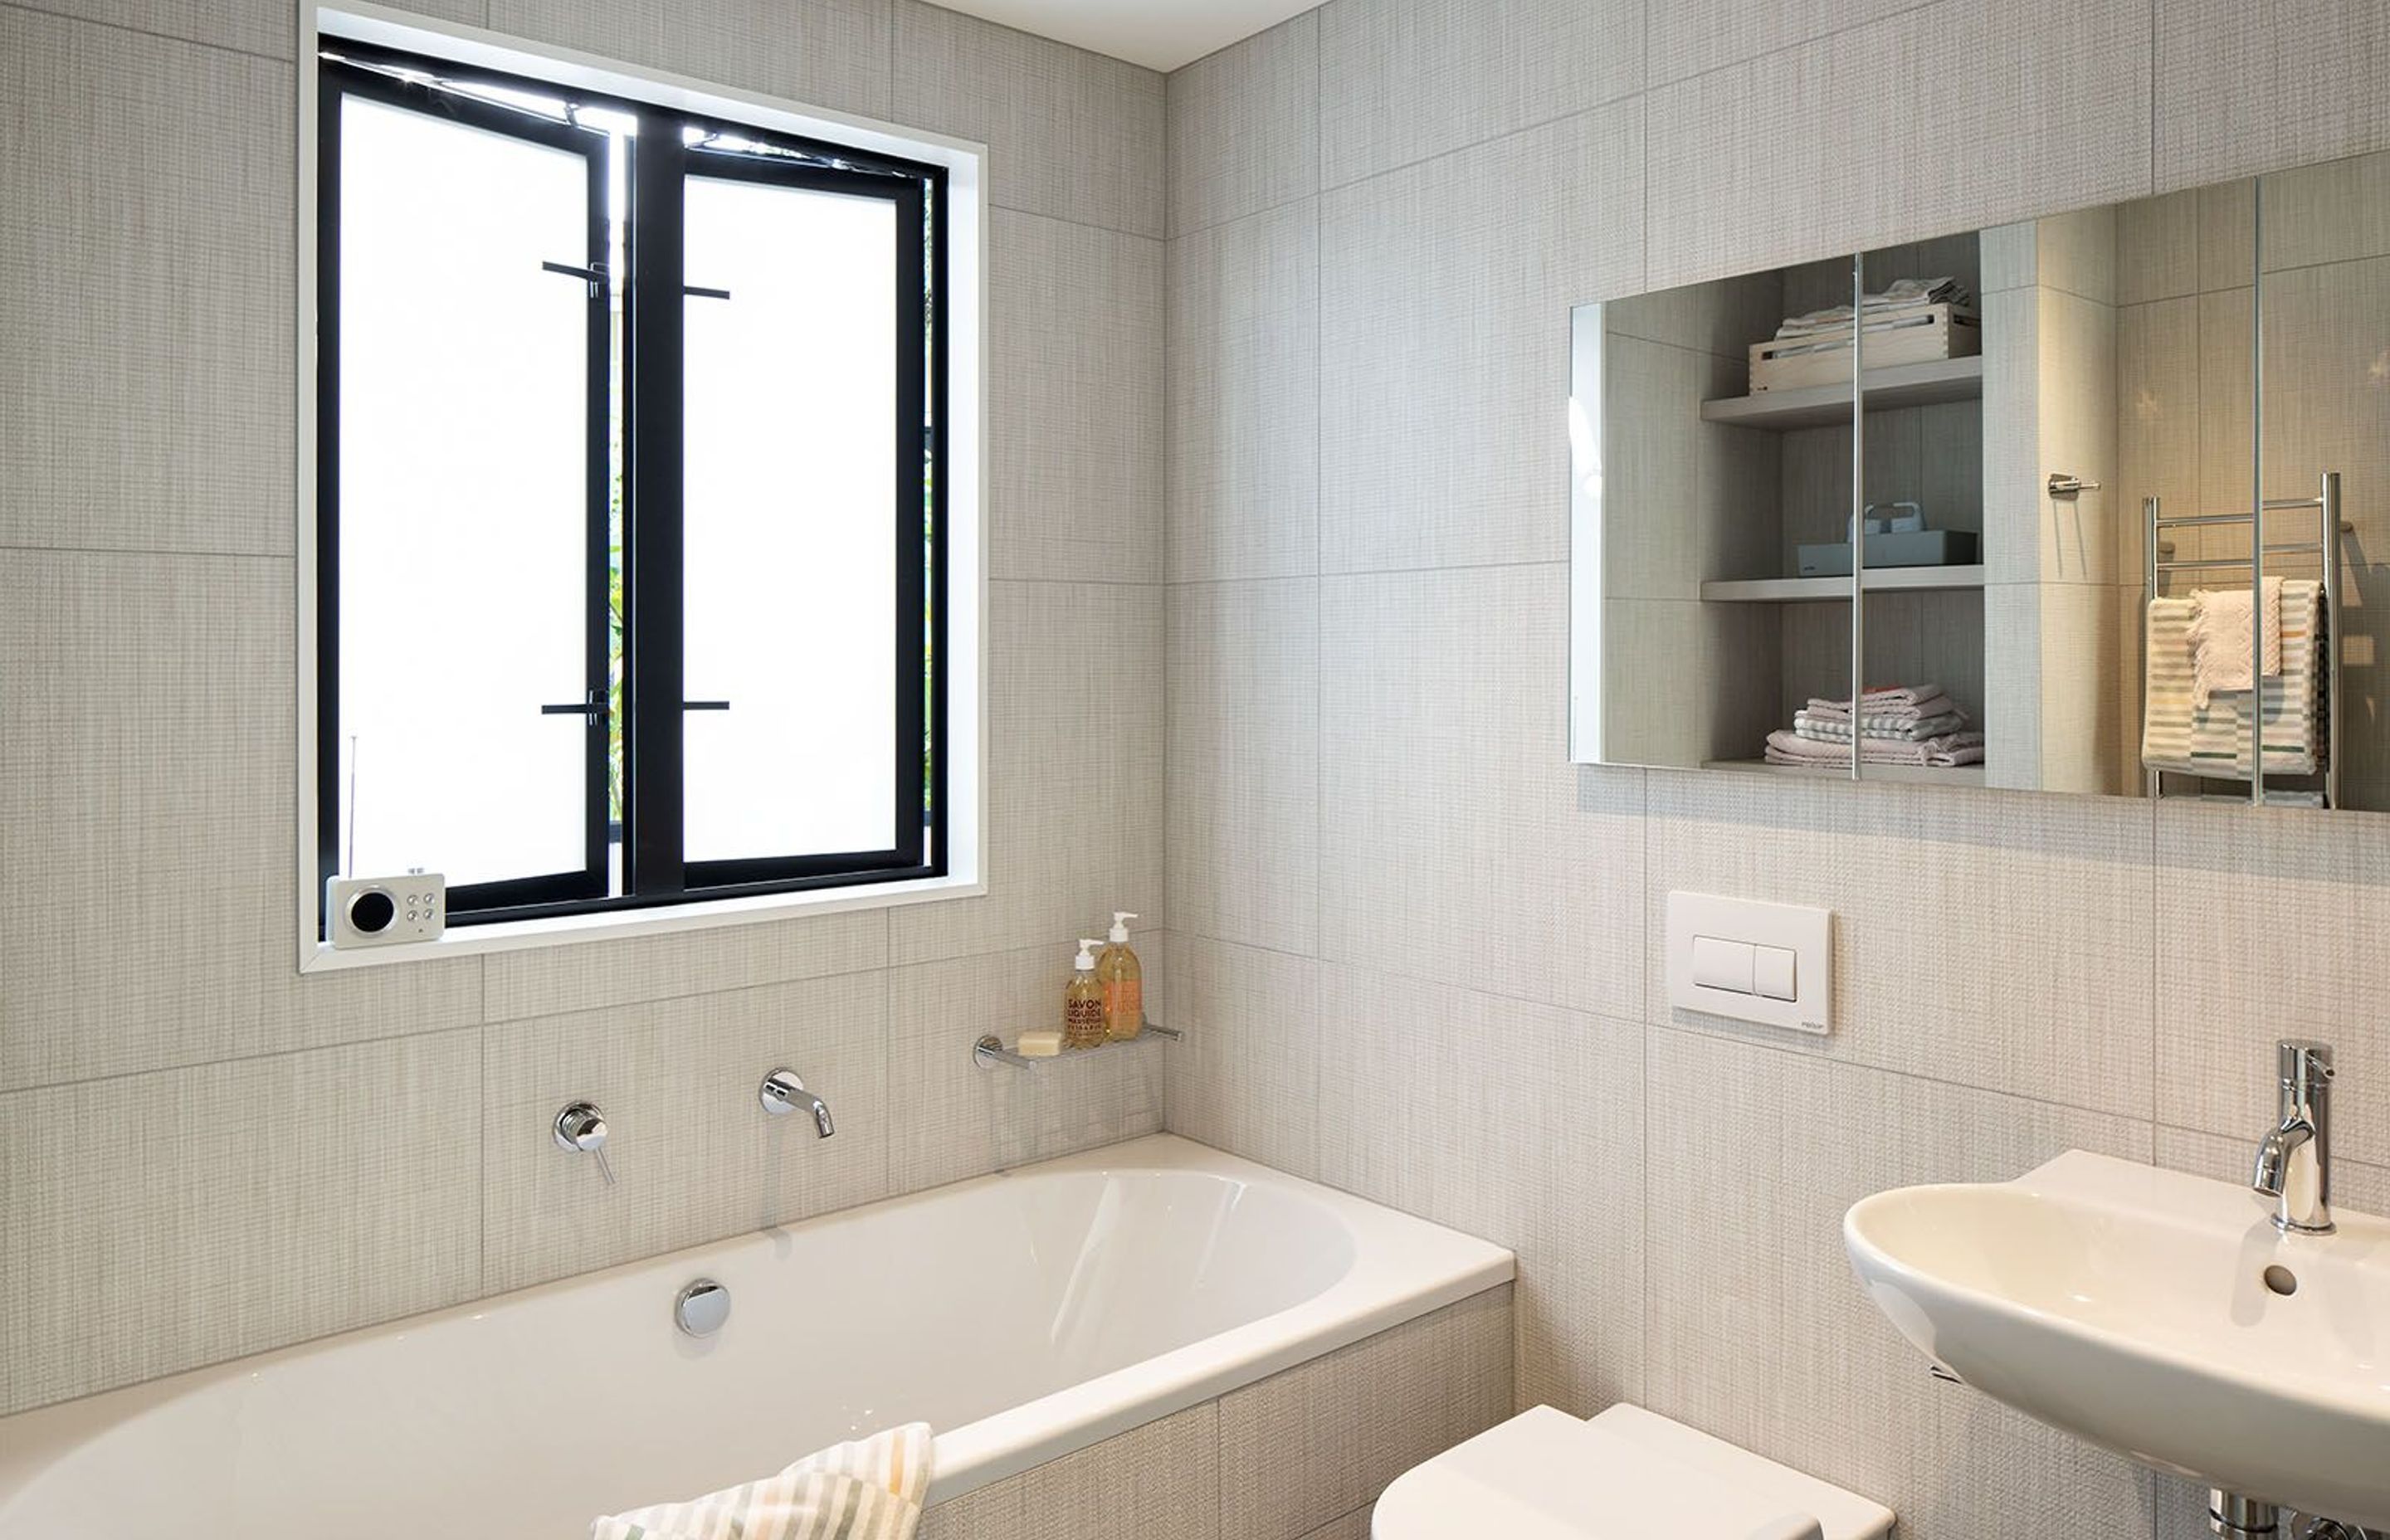 A classic bathroom features textural linen-look tiles.